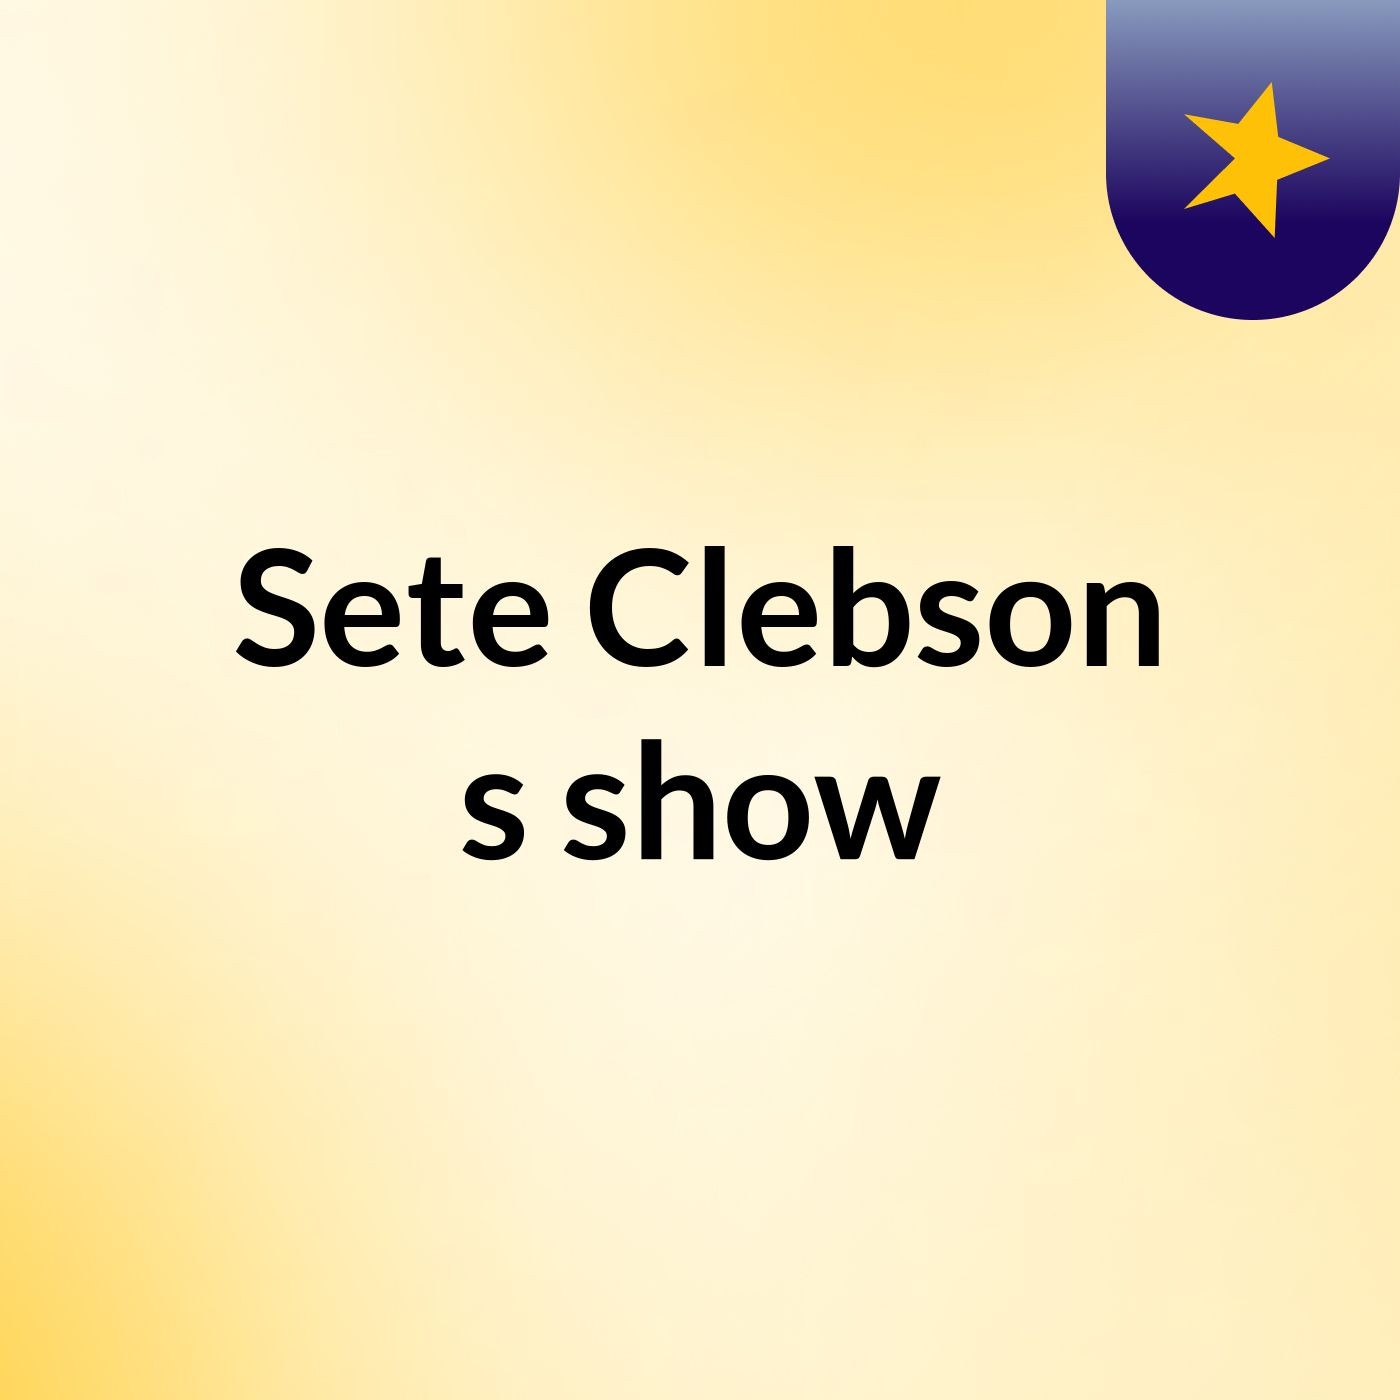 Sete Clebson's show